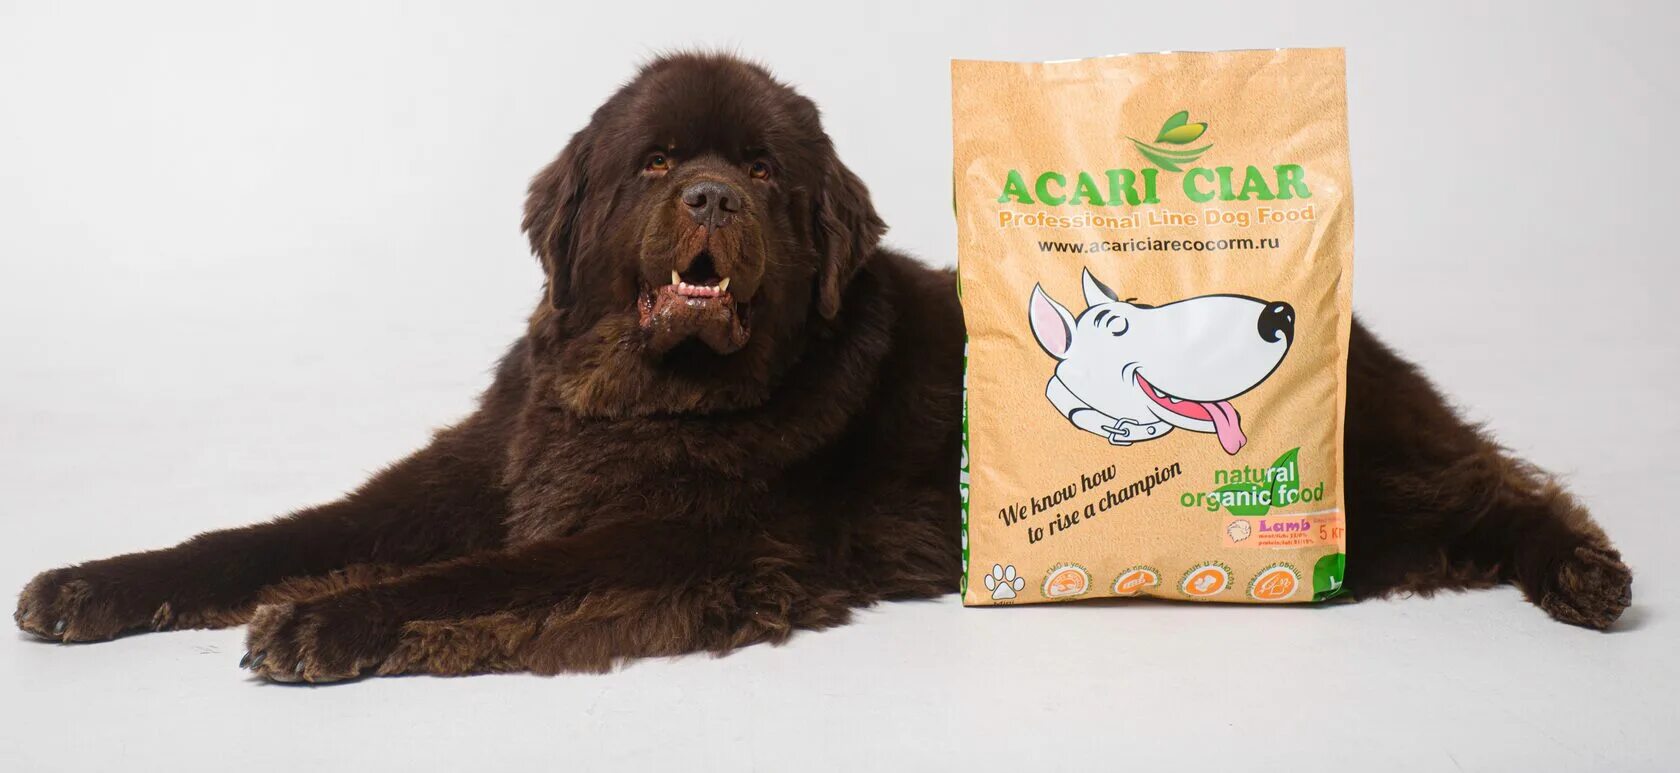 Корм акари киар купить. Acari Ciar корм для собак. Акари Киар корм для собак производитель. Acari Ciar корм логотип.